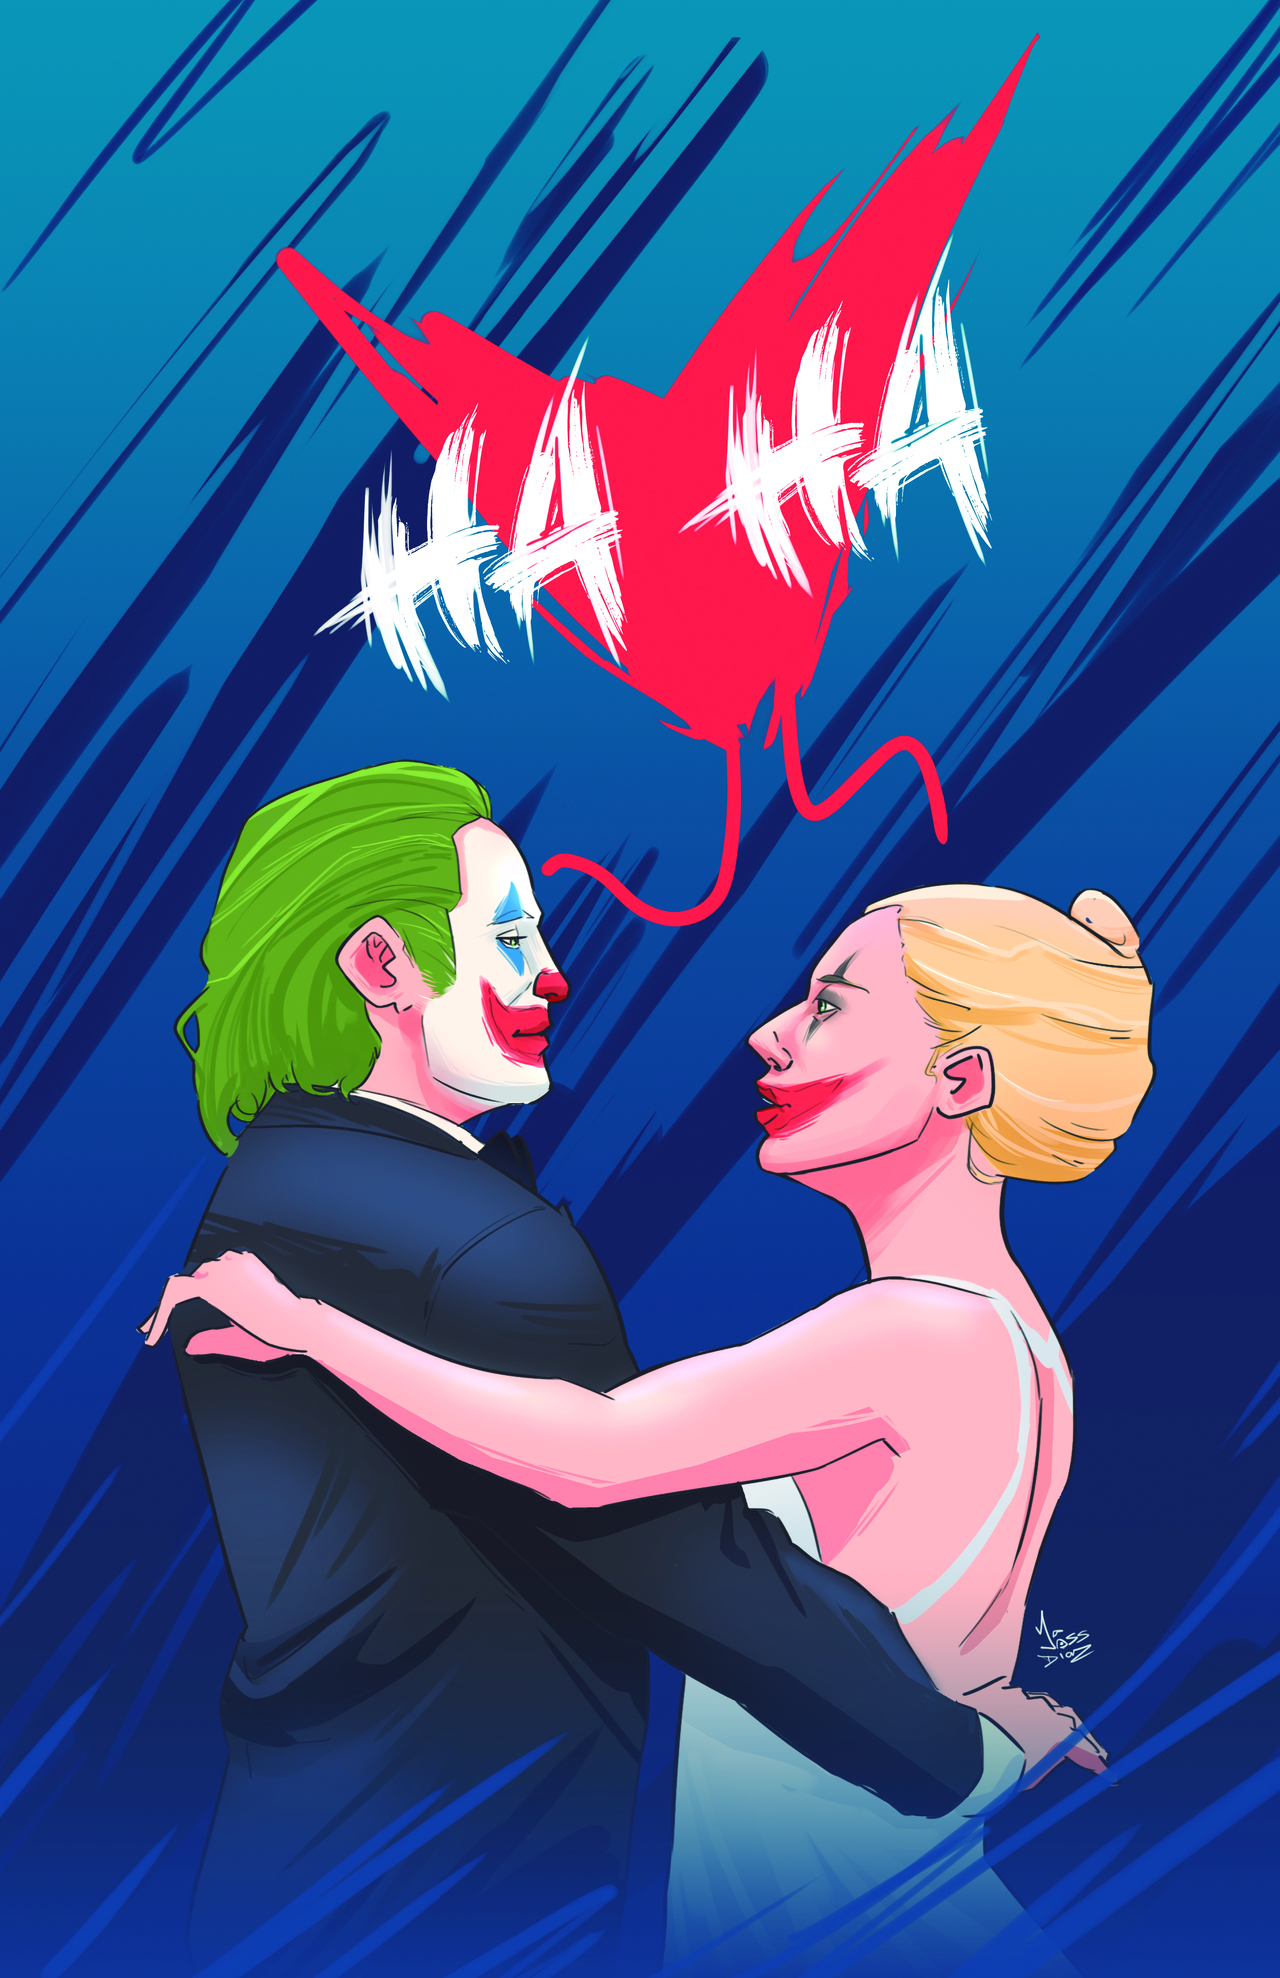 Joker y Harley Quinn, un amor enfermizo